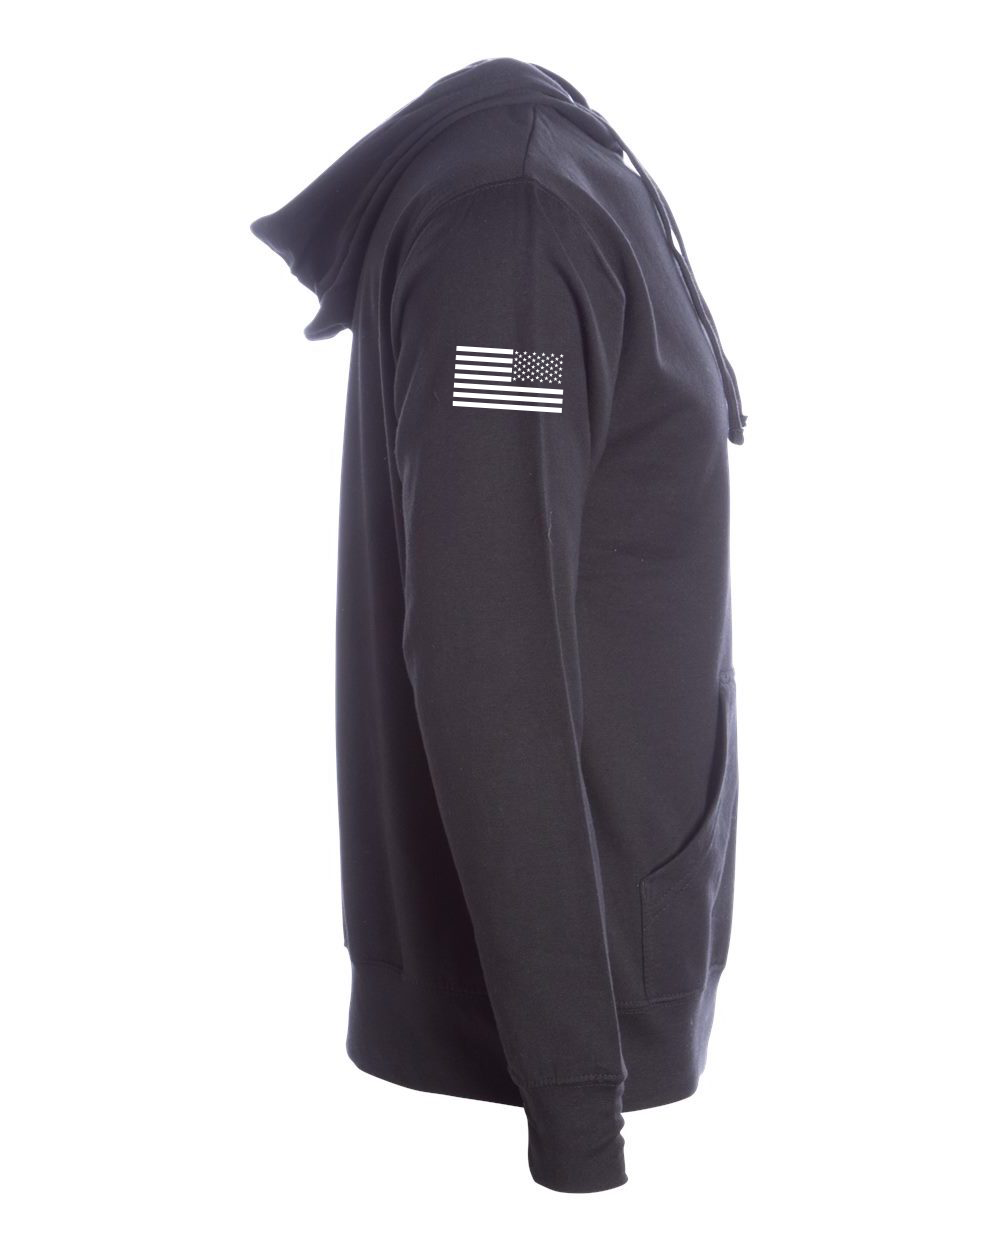 Auburn Police Department Comfort Unisex Hooded Sweatshirt - QV5Y8s